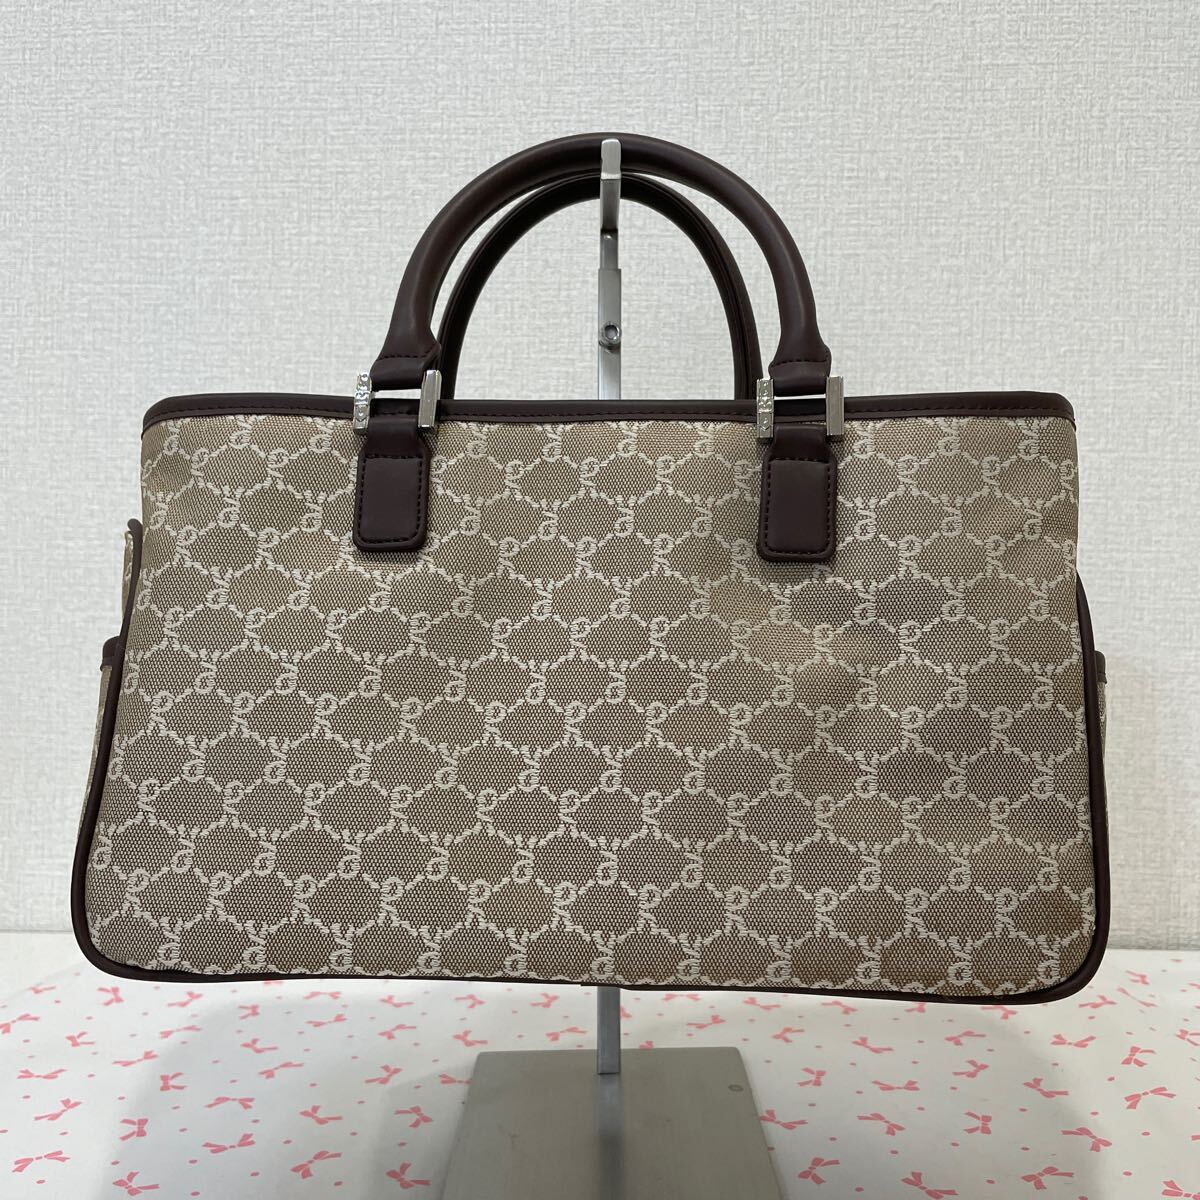  Roberta di Camerino beautiful goods handbag tote bag stylish 